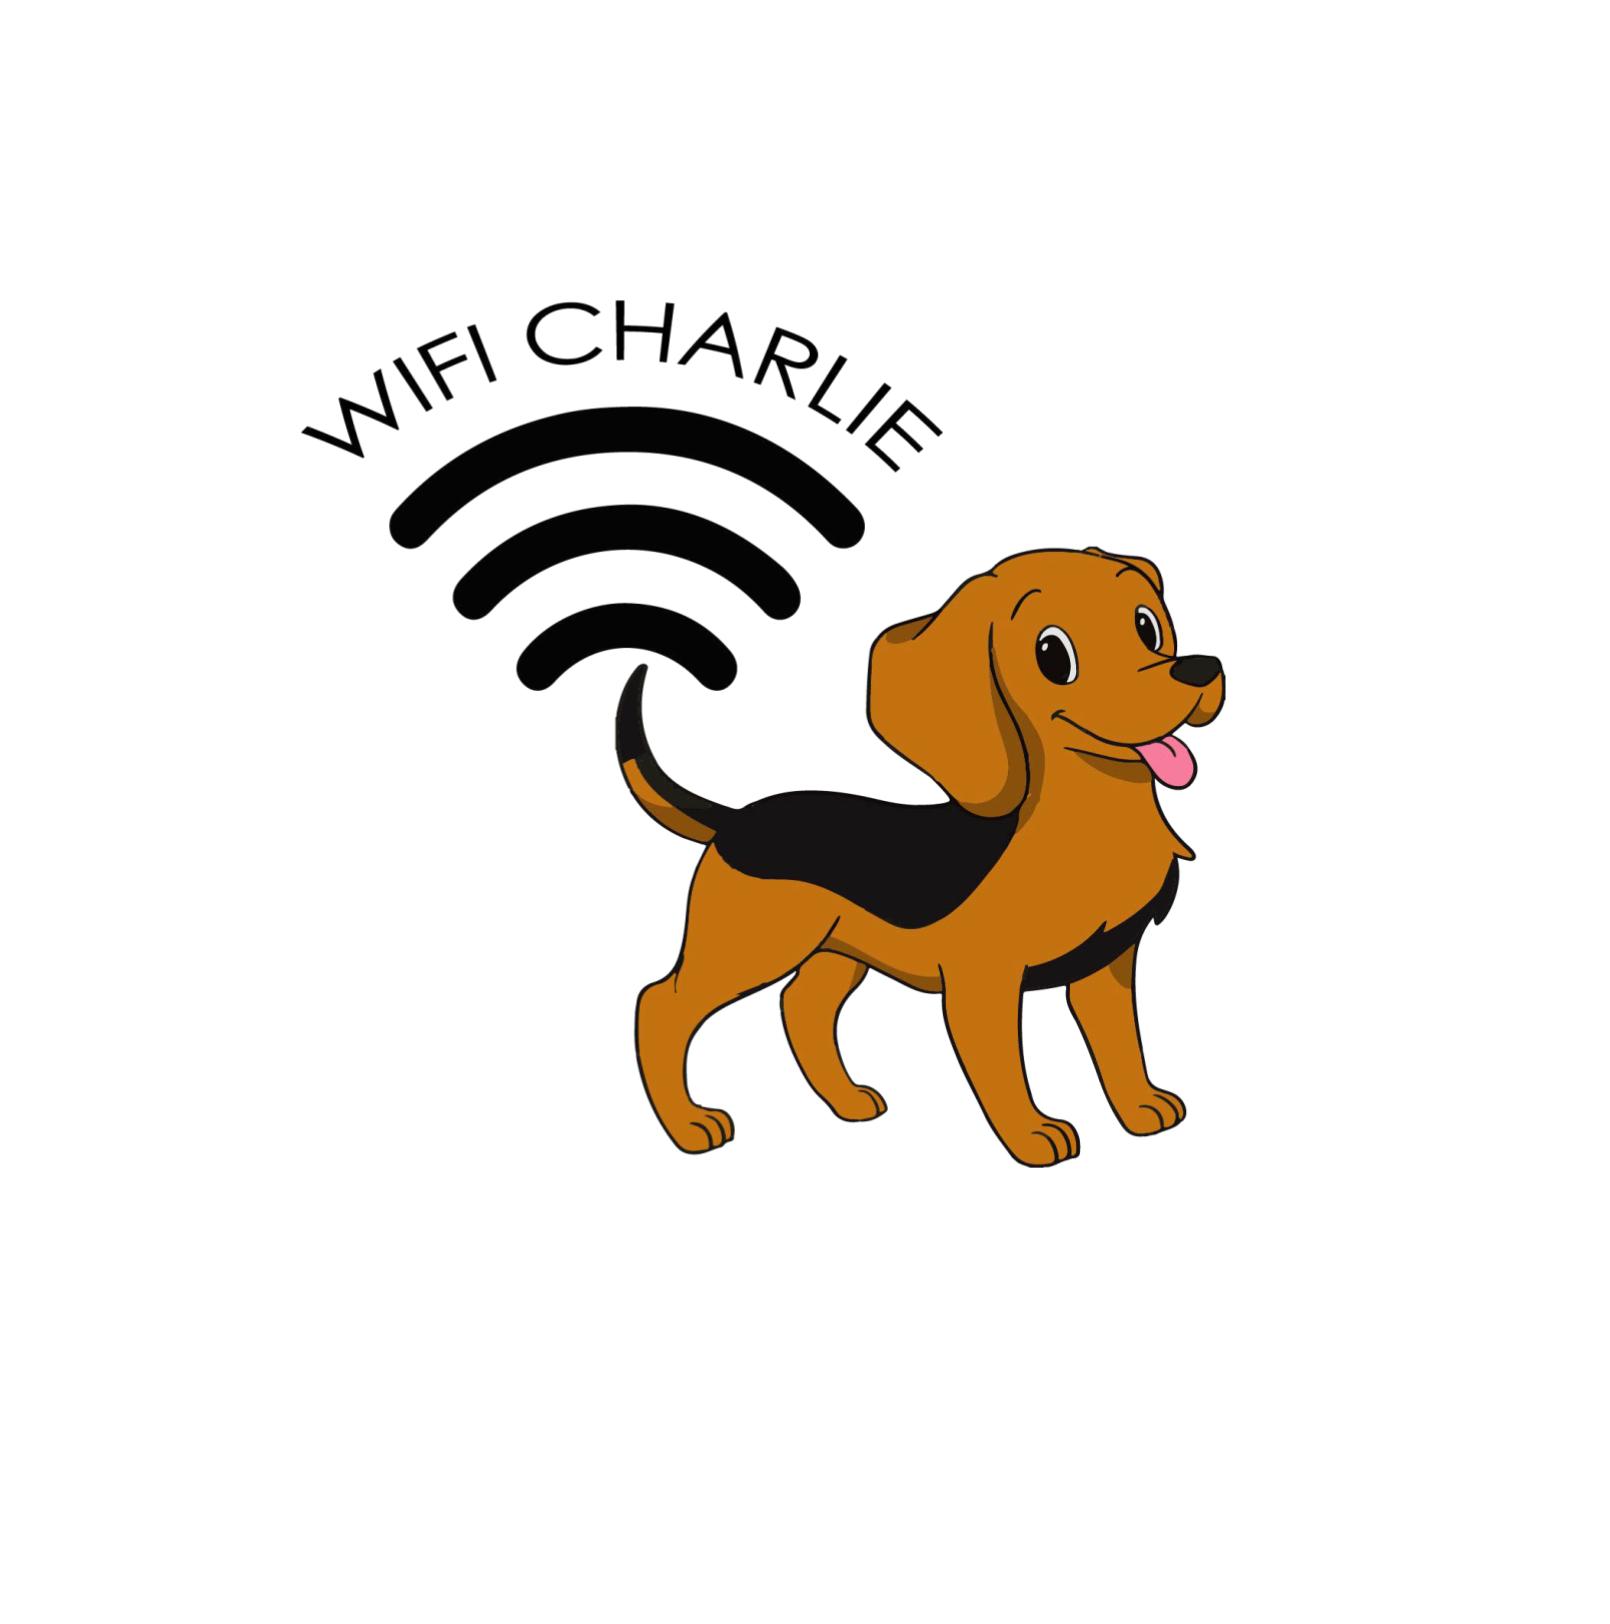 WiFi Charlie